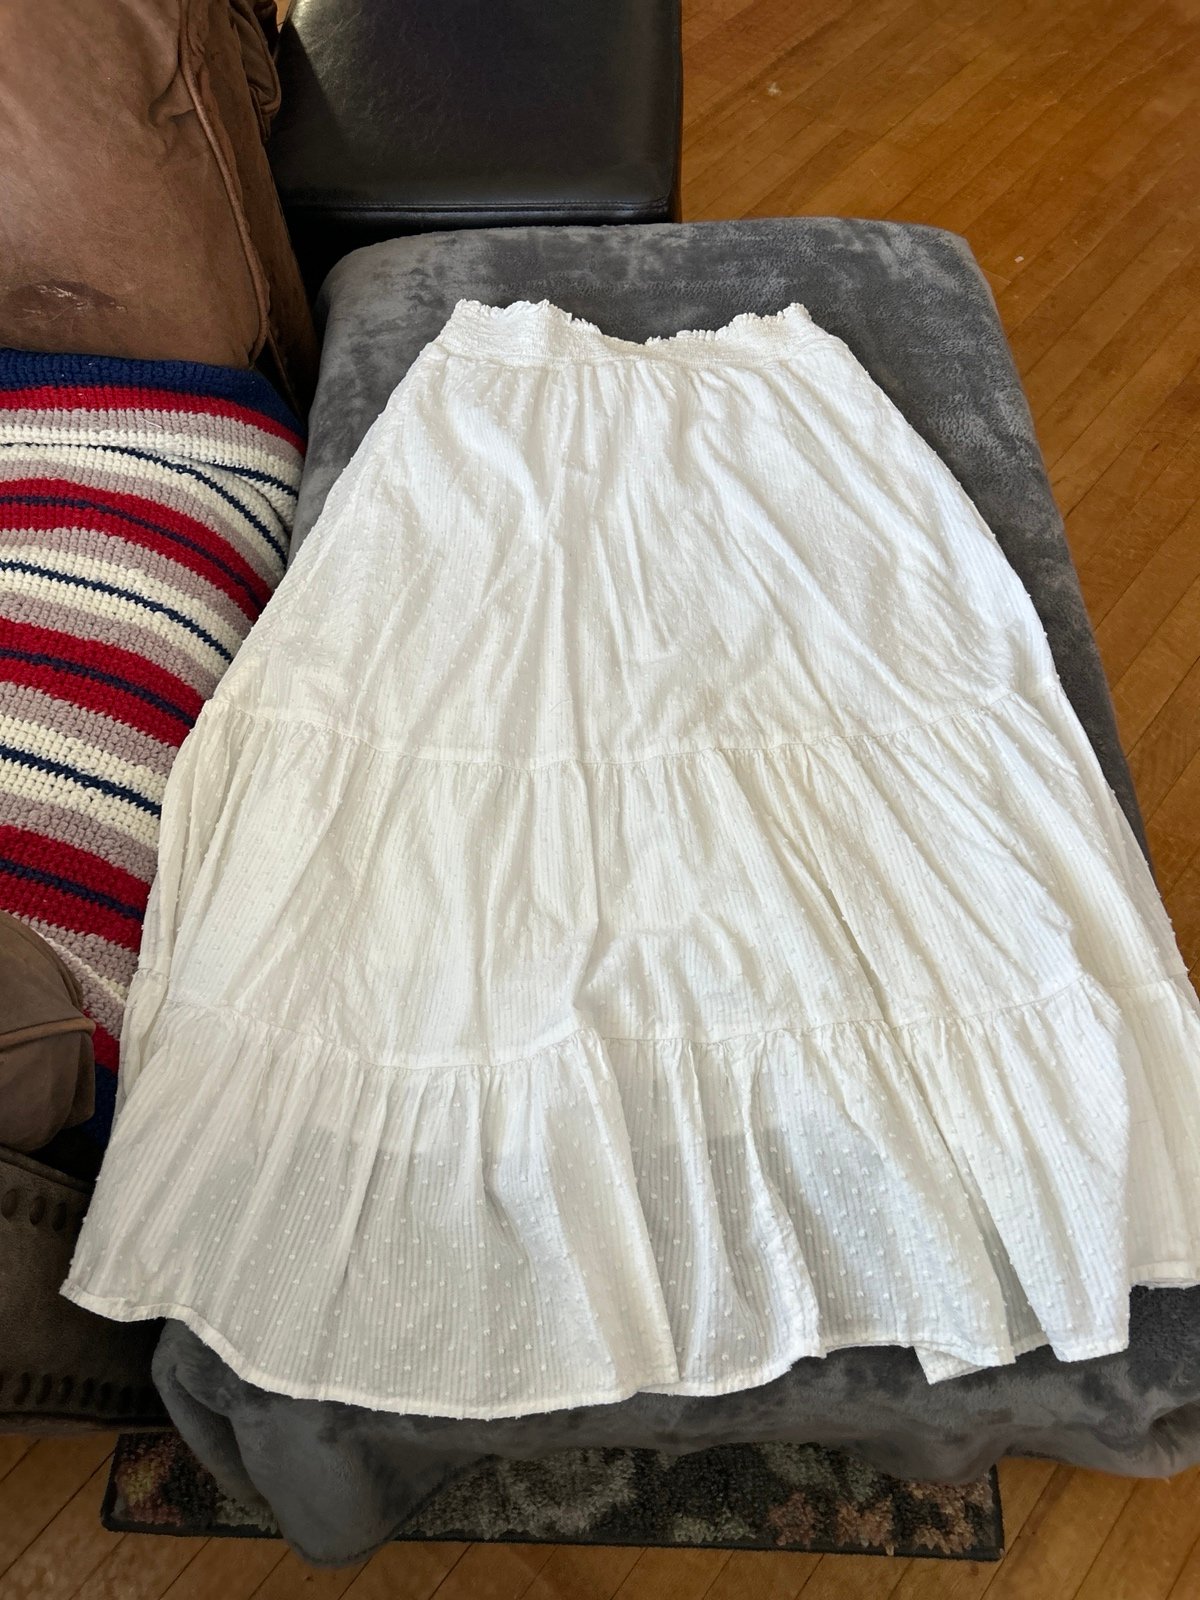 Buy lauren conrad skirt size large never worn gr0D9E2fa Online Exclusive